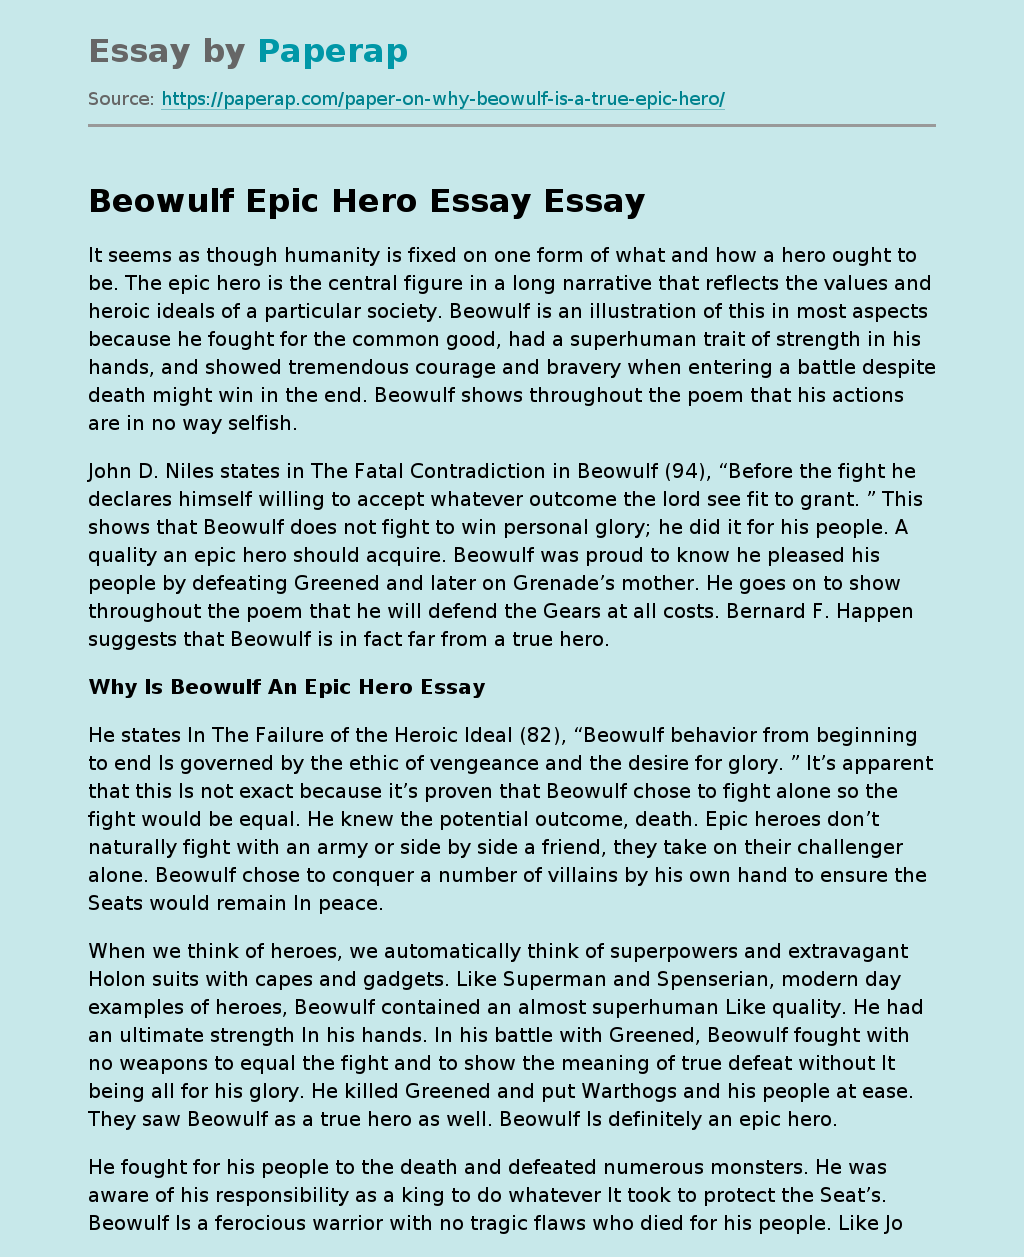 Beowulf Epic Hero Essay